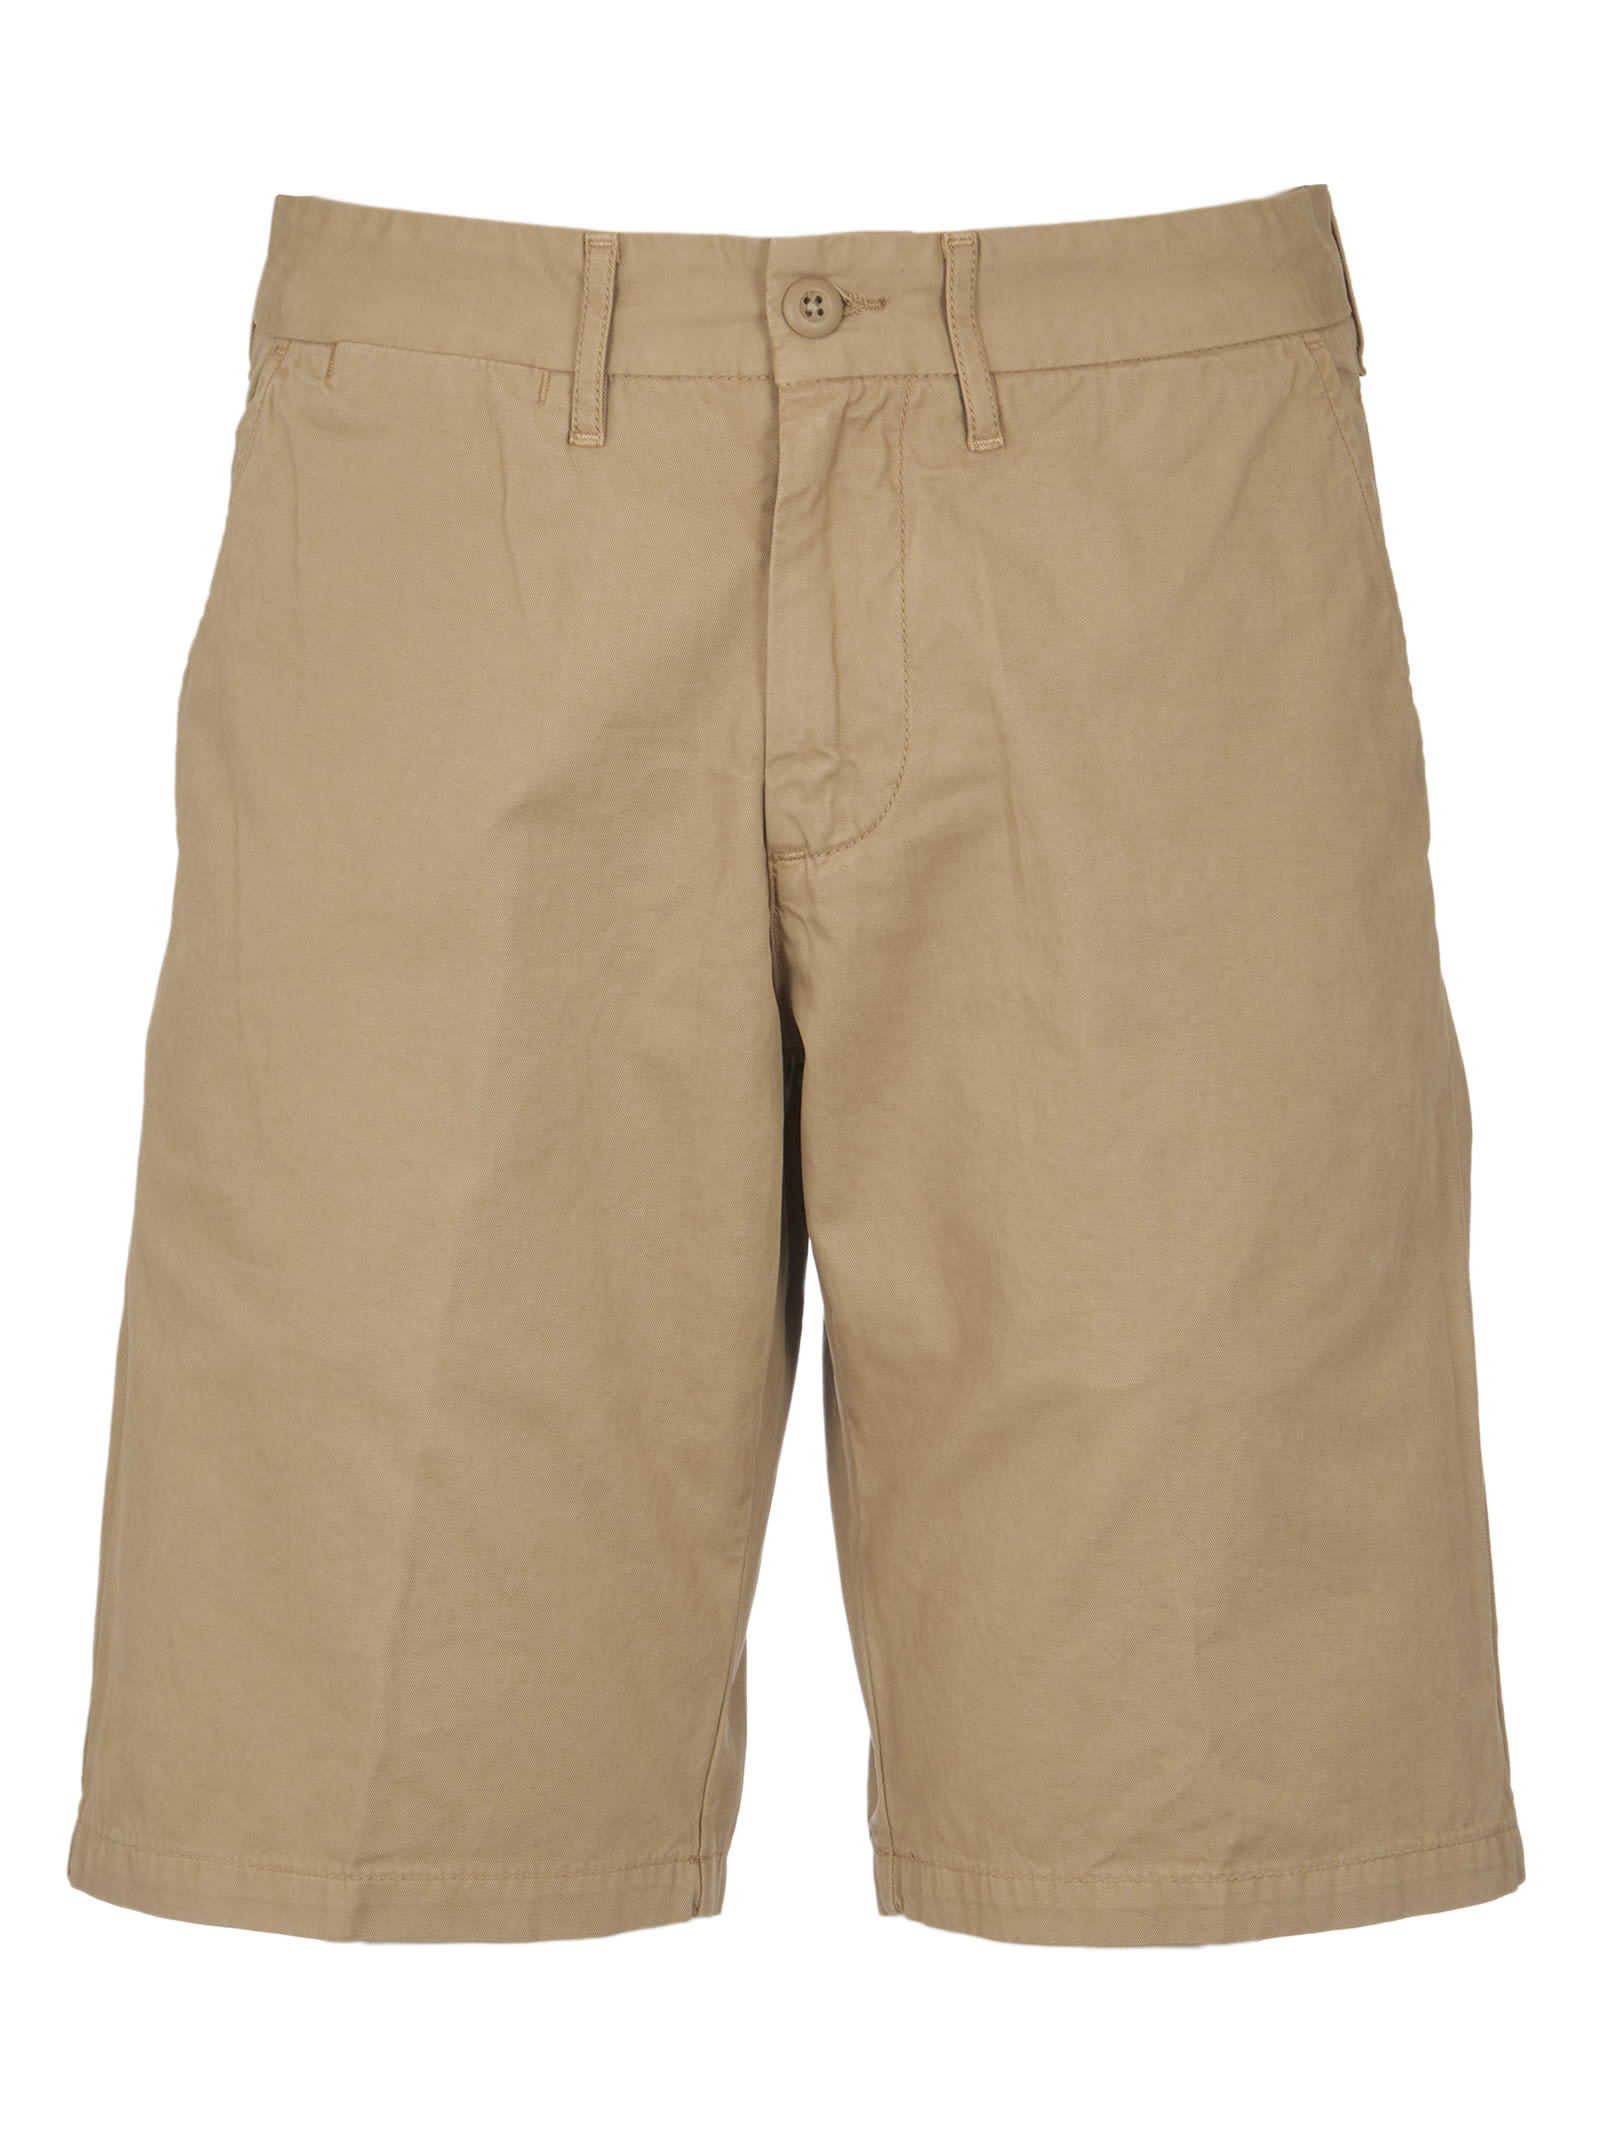 Carhartt Classic Buttoned Shorts